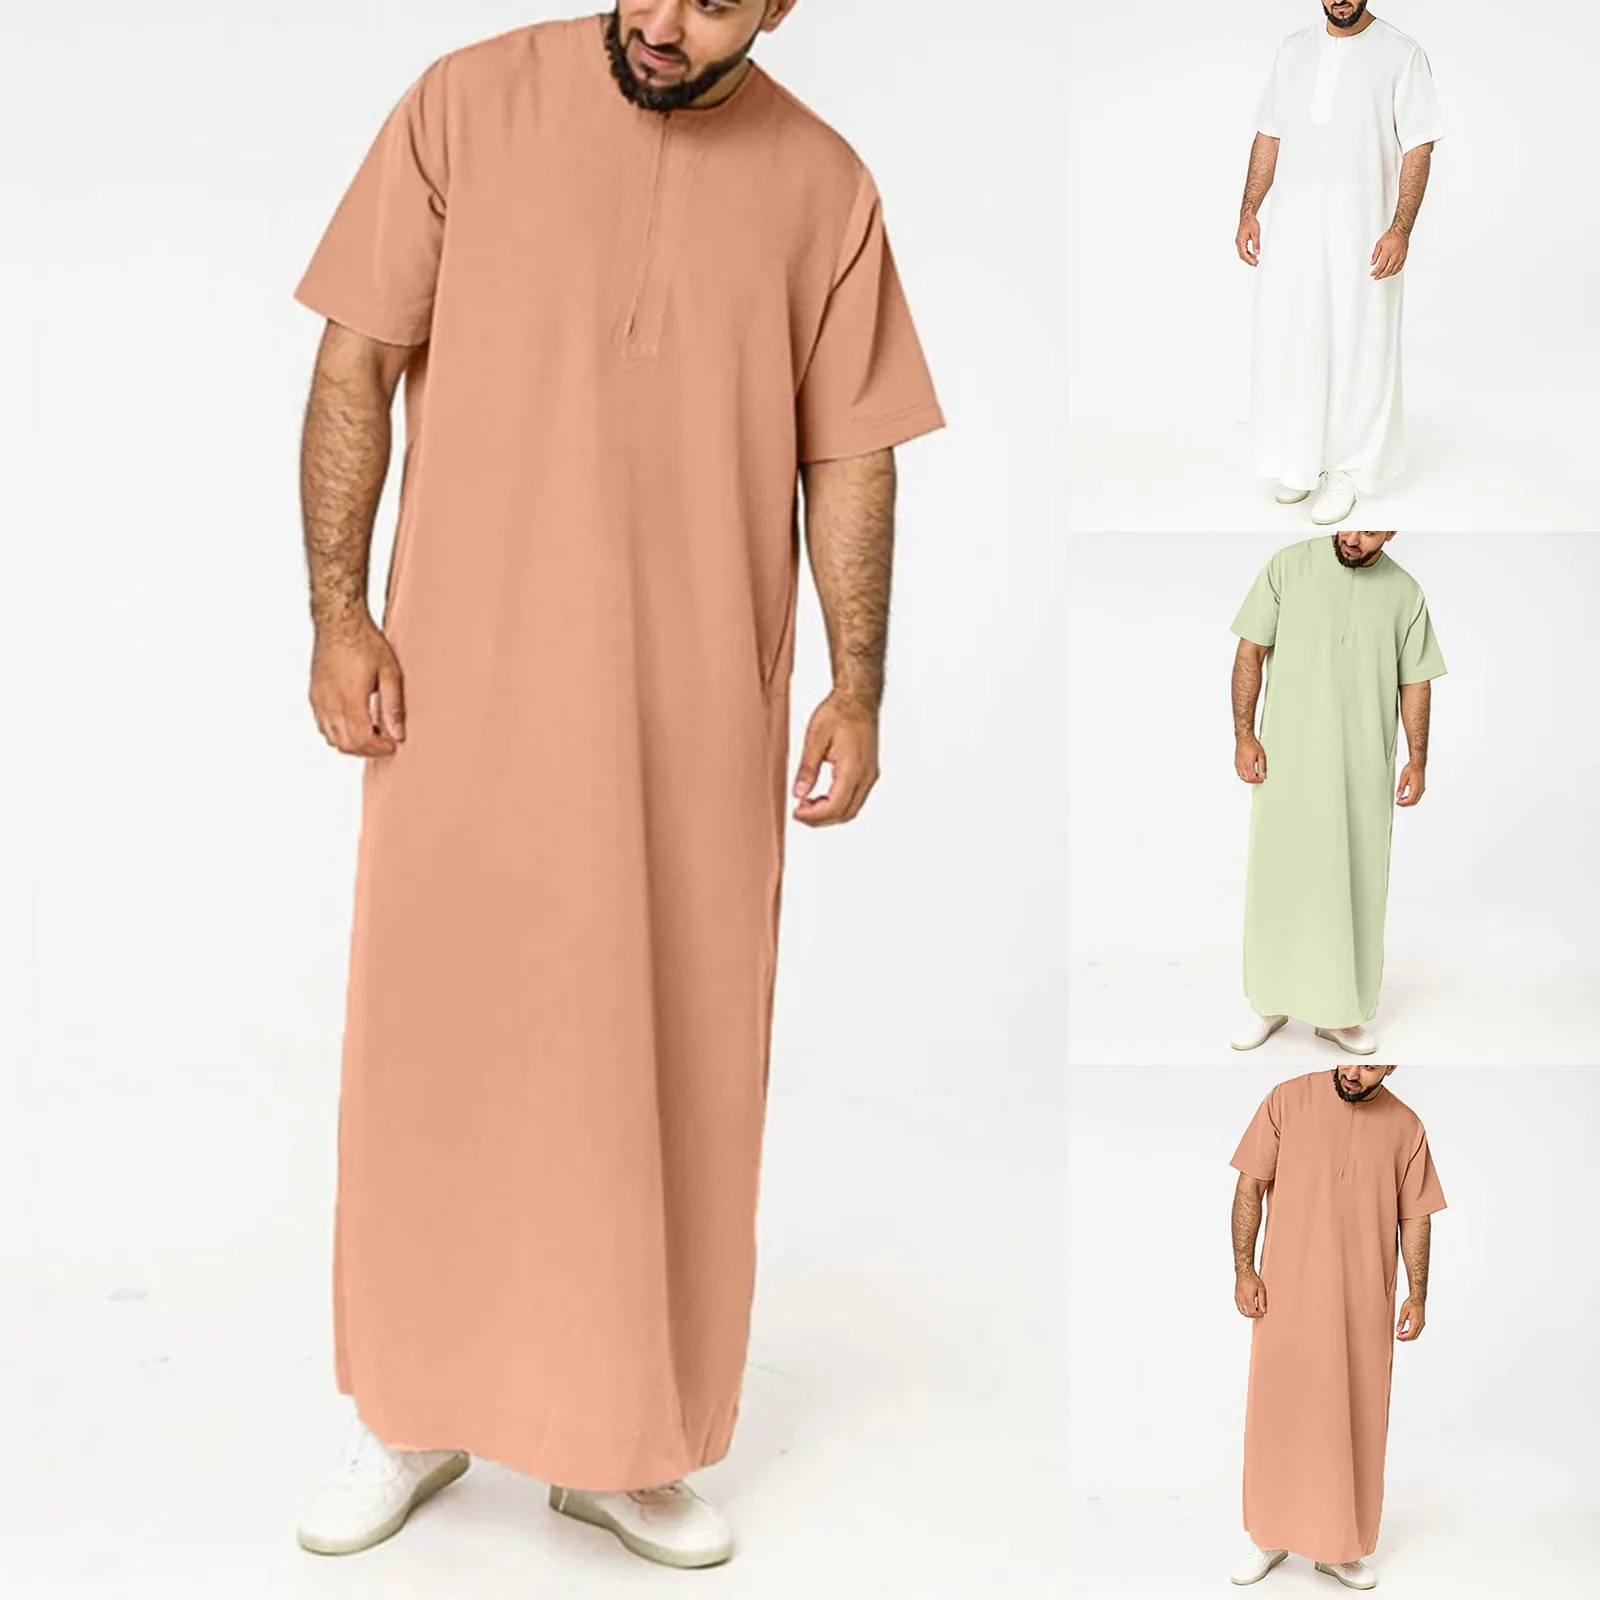 

Mens Arab Muslim Long Robe Shirt Casual Loose Long Sleeves Male Pocket Kaftan Robe Cotton Linen Button Plain Robes Plus Size